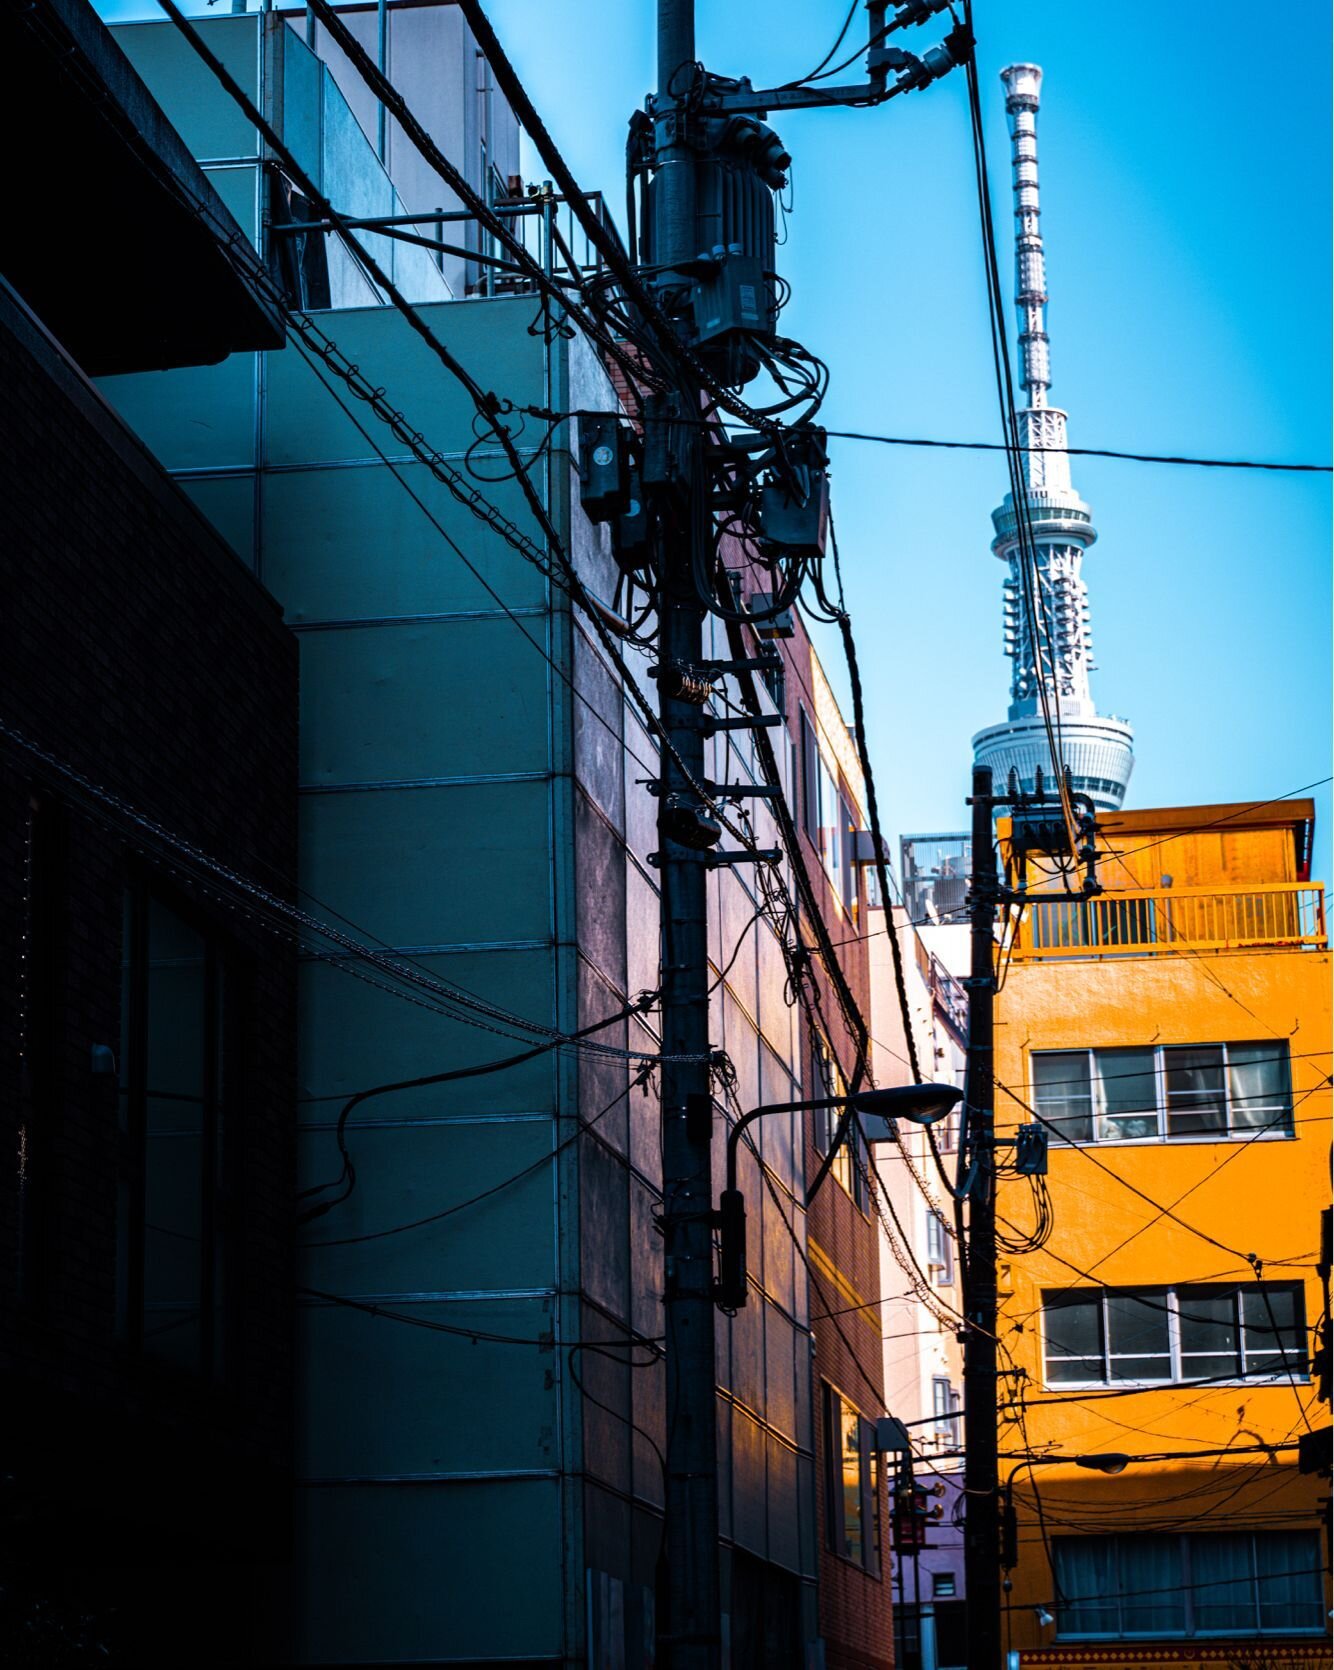 Perspectives of #TokyoSkyTree walking around #Asakusa

Camera: #SonyA7CR

#Tokyo #Japan